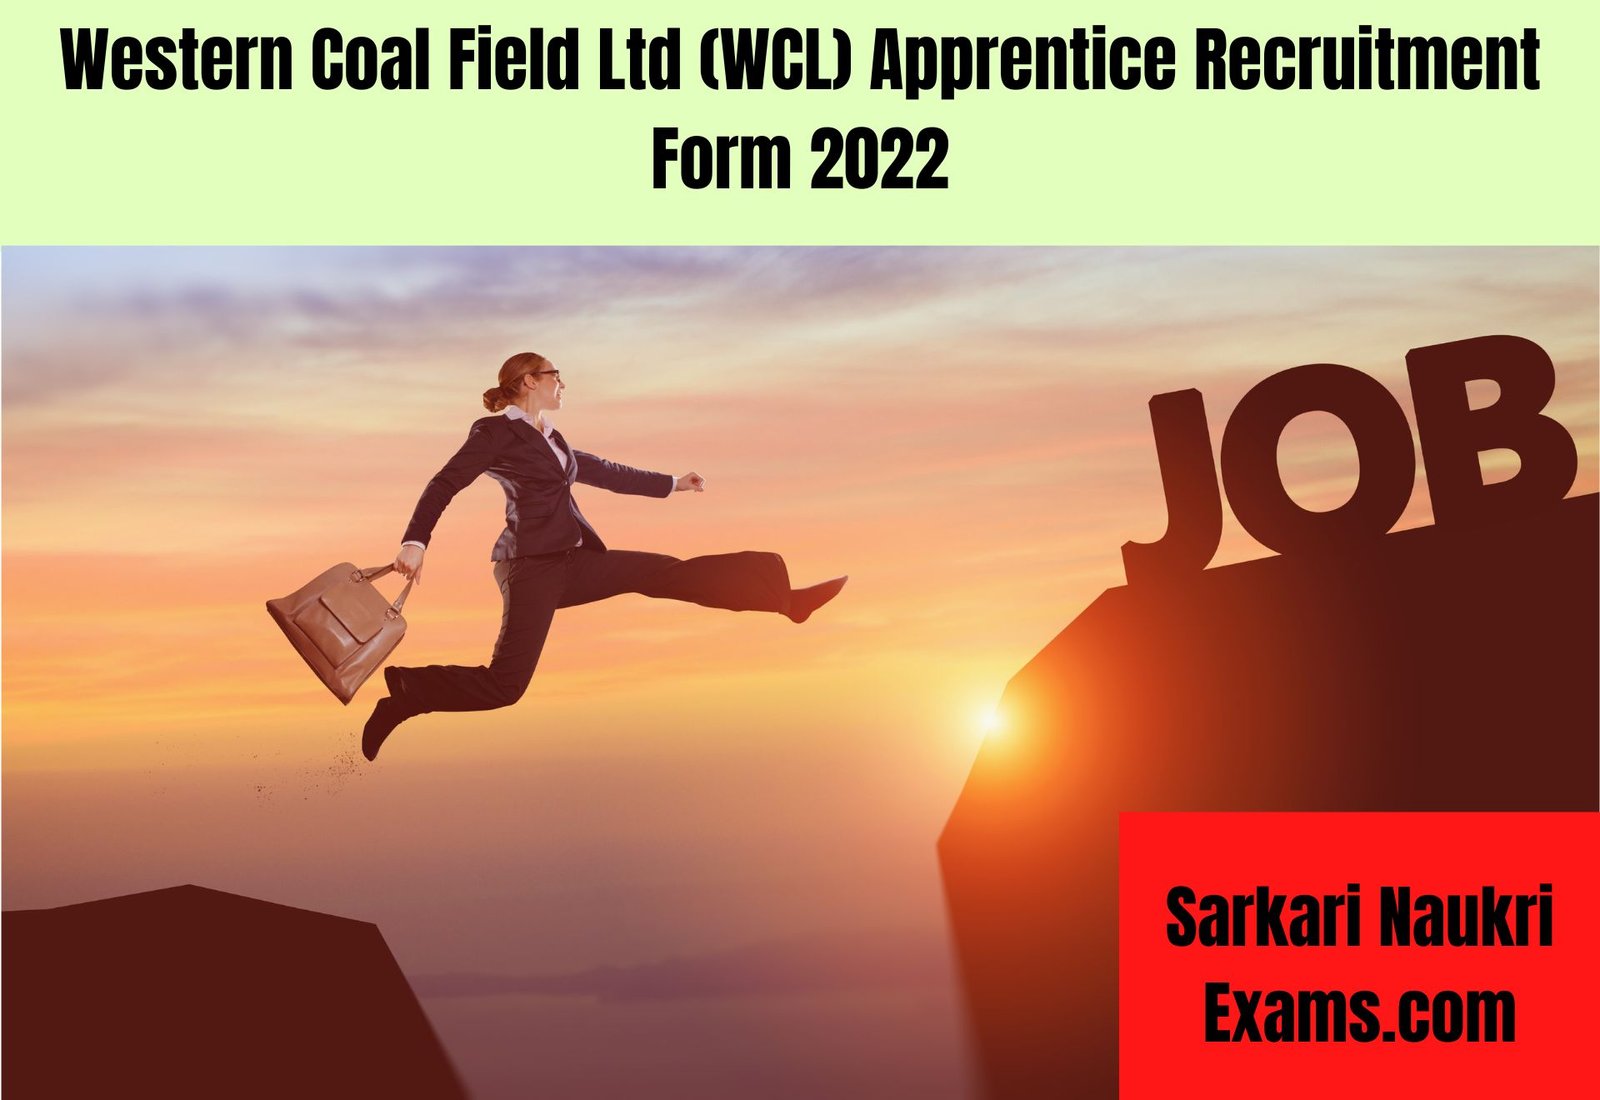 Western Coal Field Ltd (WCL) Apprentice Recruitment Form 2022 | ITI Pass Job